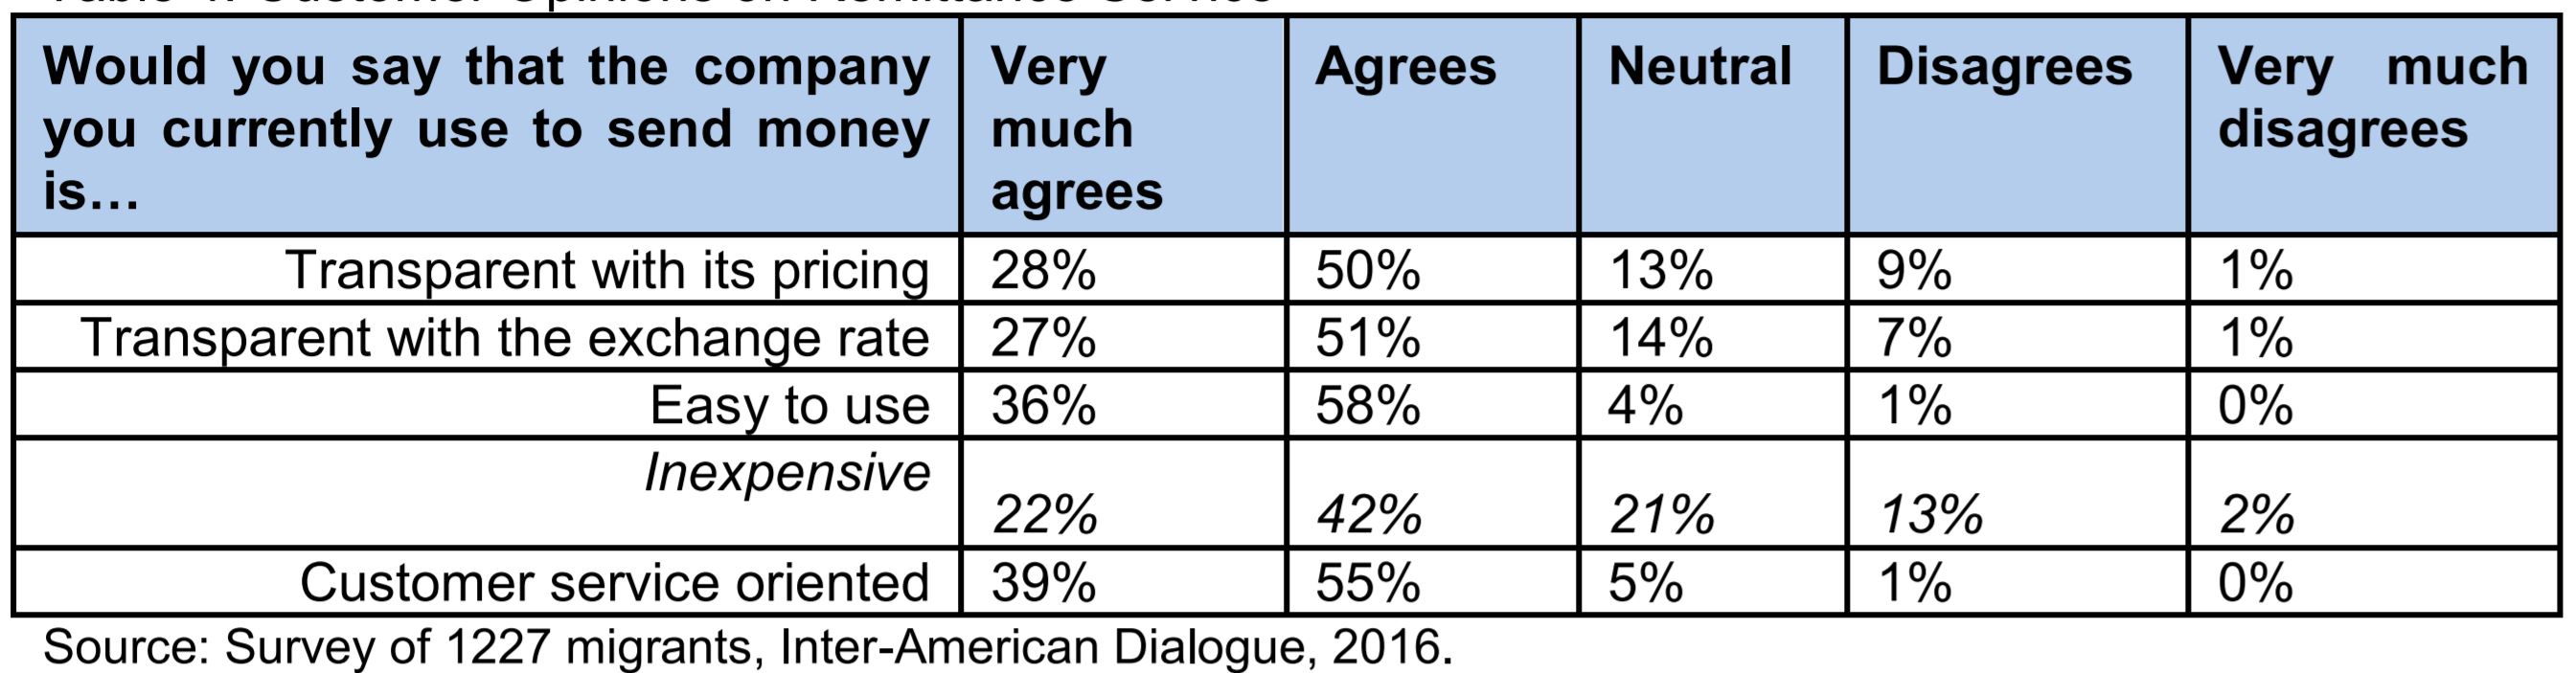 Inter-American Dialogue Survey - Feedback 2016